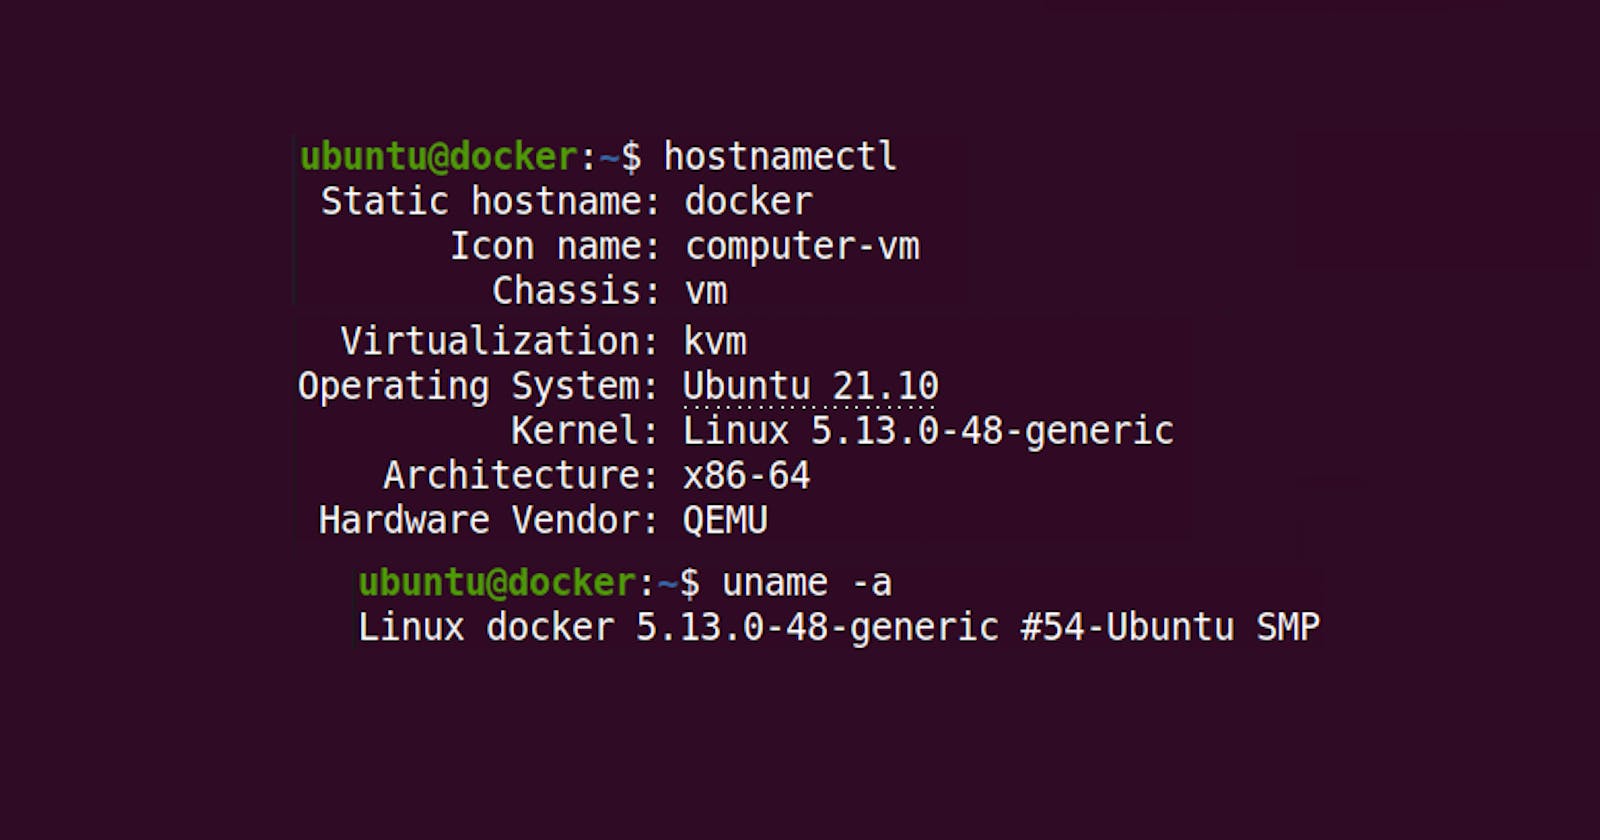 Ubuntu 20.04 LTS: How to change the hostname